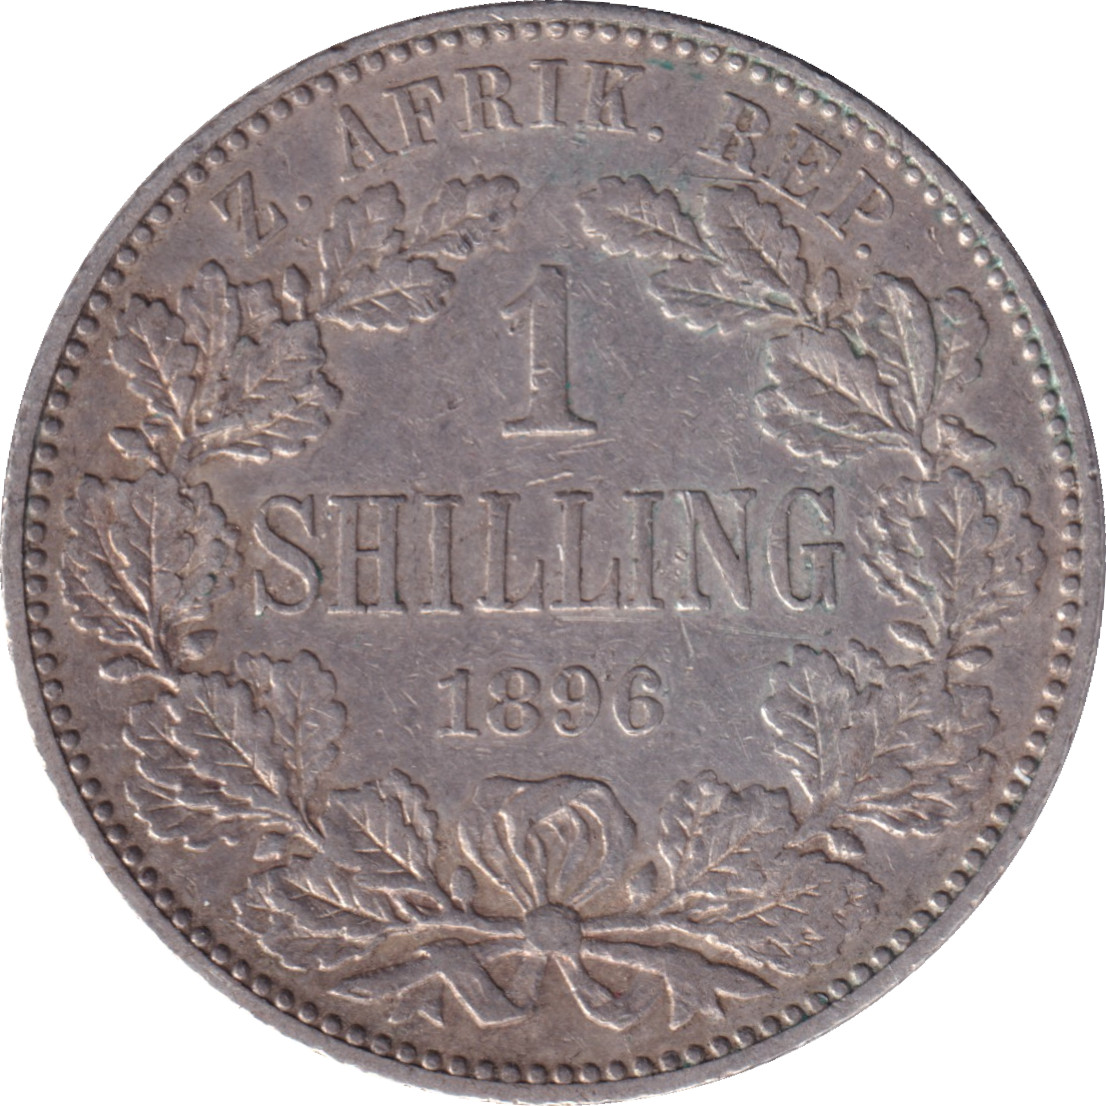 1 shilling - Krugger